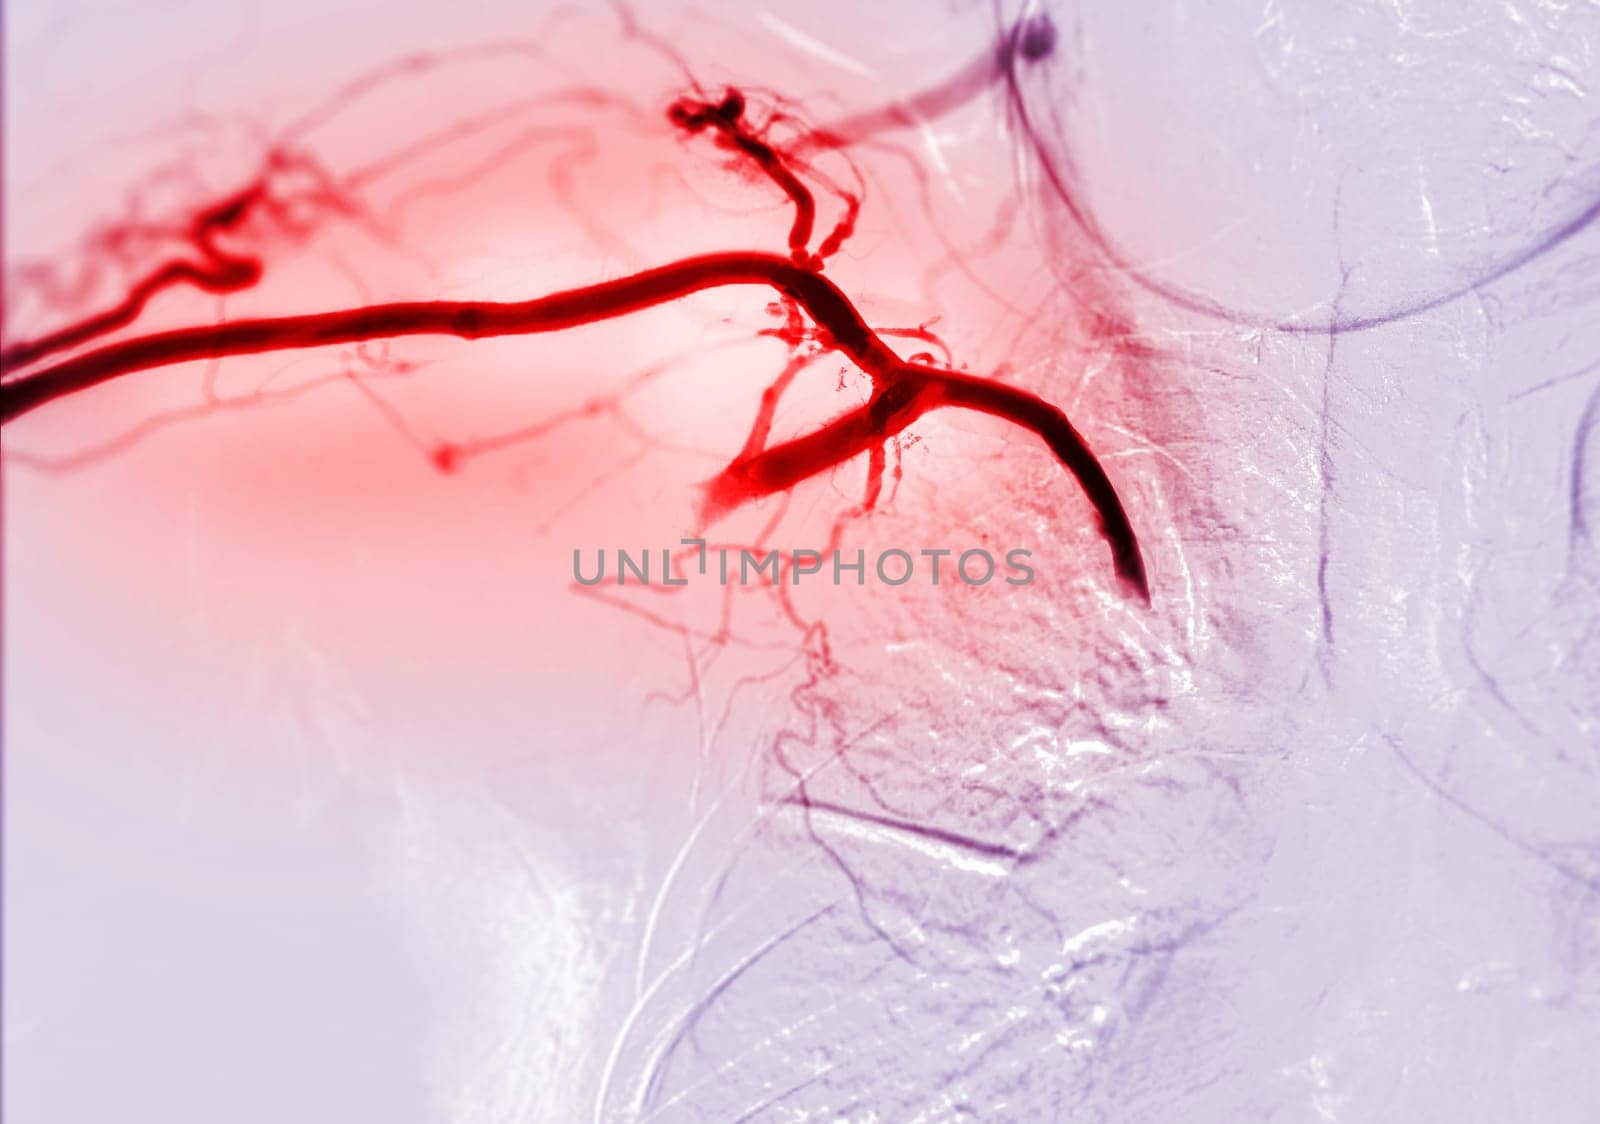 Image of Angioplasty, balloon angioplasty and percutaneous transluminal angioplasty (PTA) .